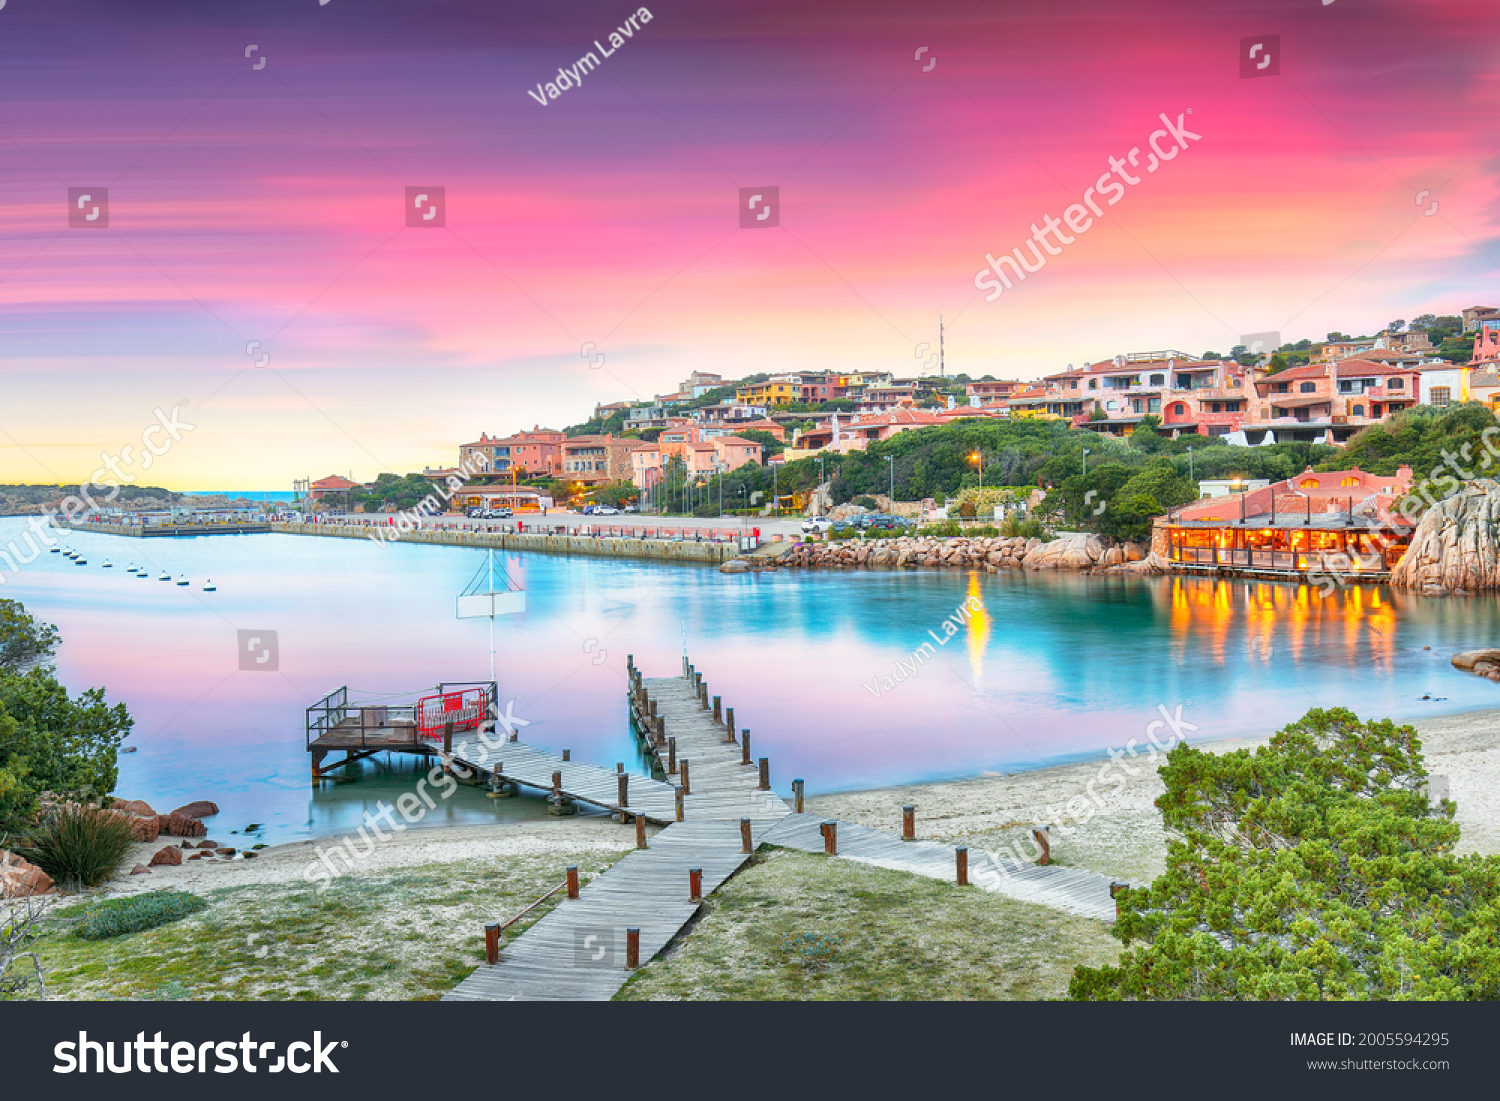 Astonishing view of Porto Cervo at sunset. Popular tourist destination of Mediterranean sea. Location: Arzachena, Province of Sassari, Sardinia, Italy, Europe #2005594295